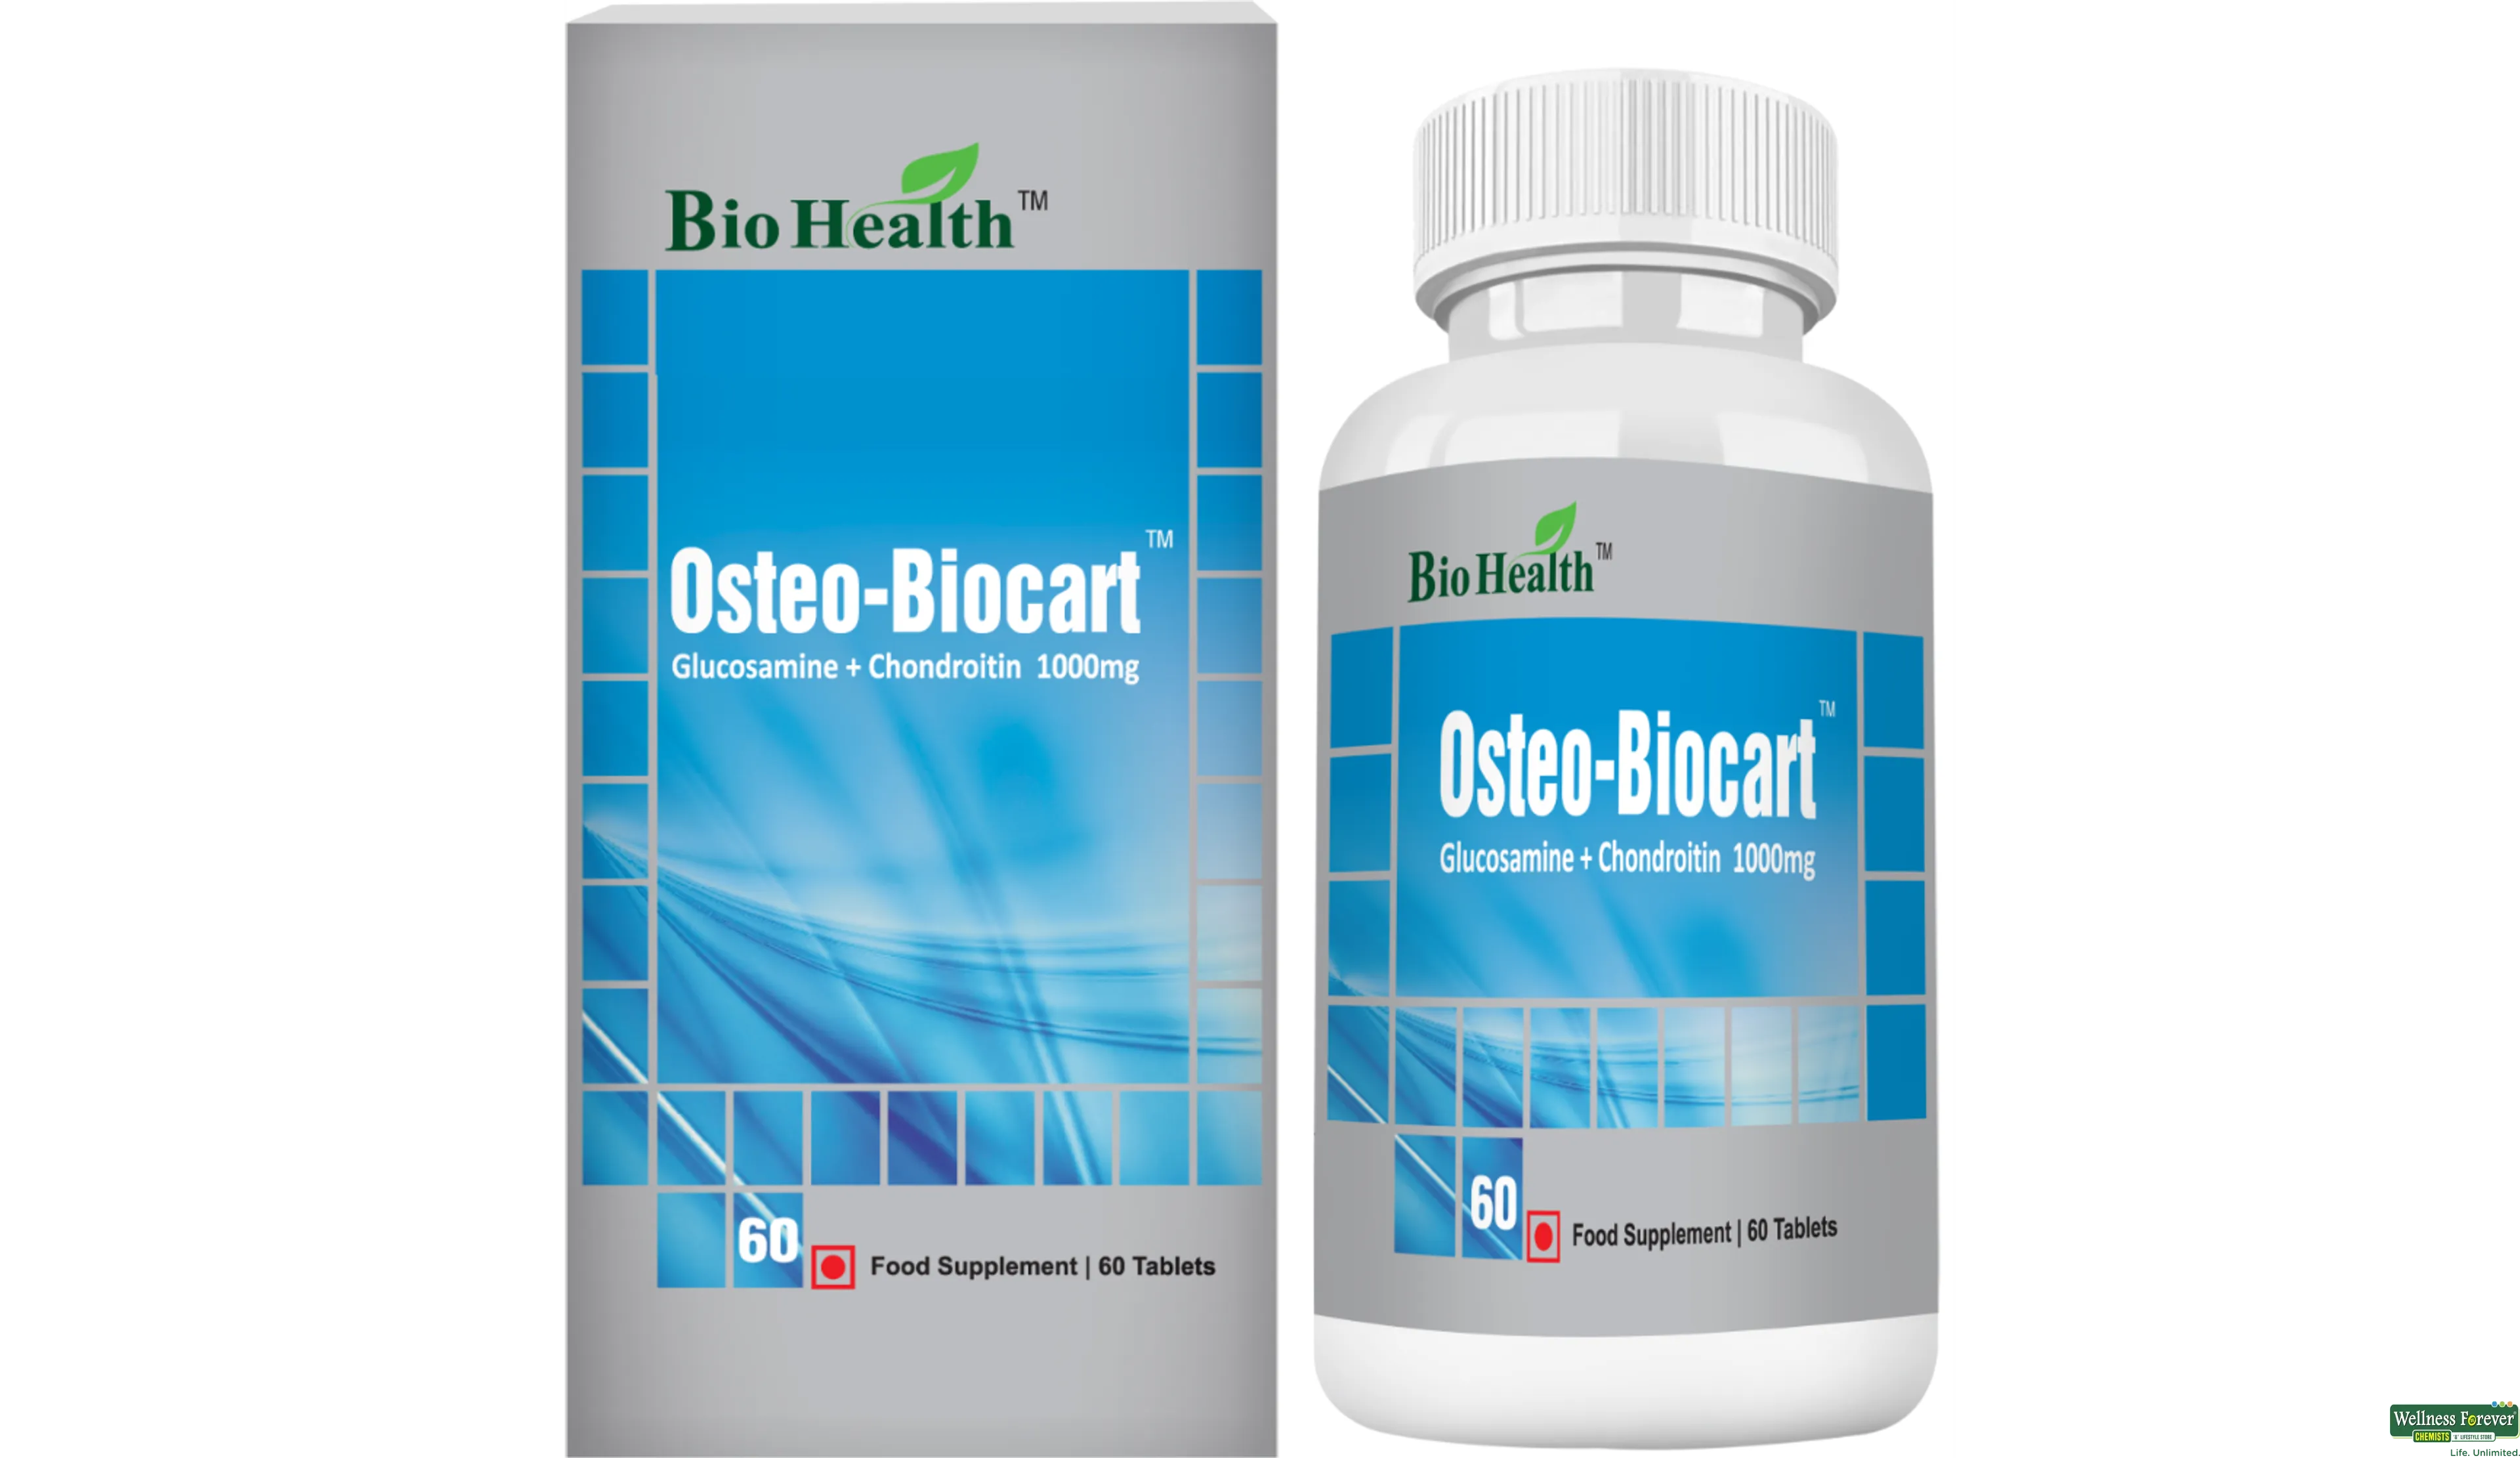 BIOHEALTH OSTEO-BIOCART 1000MG 60TAB- 1, 60TAB, 